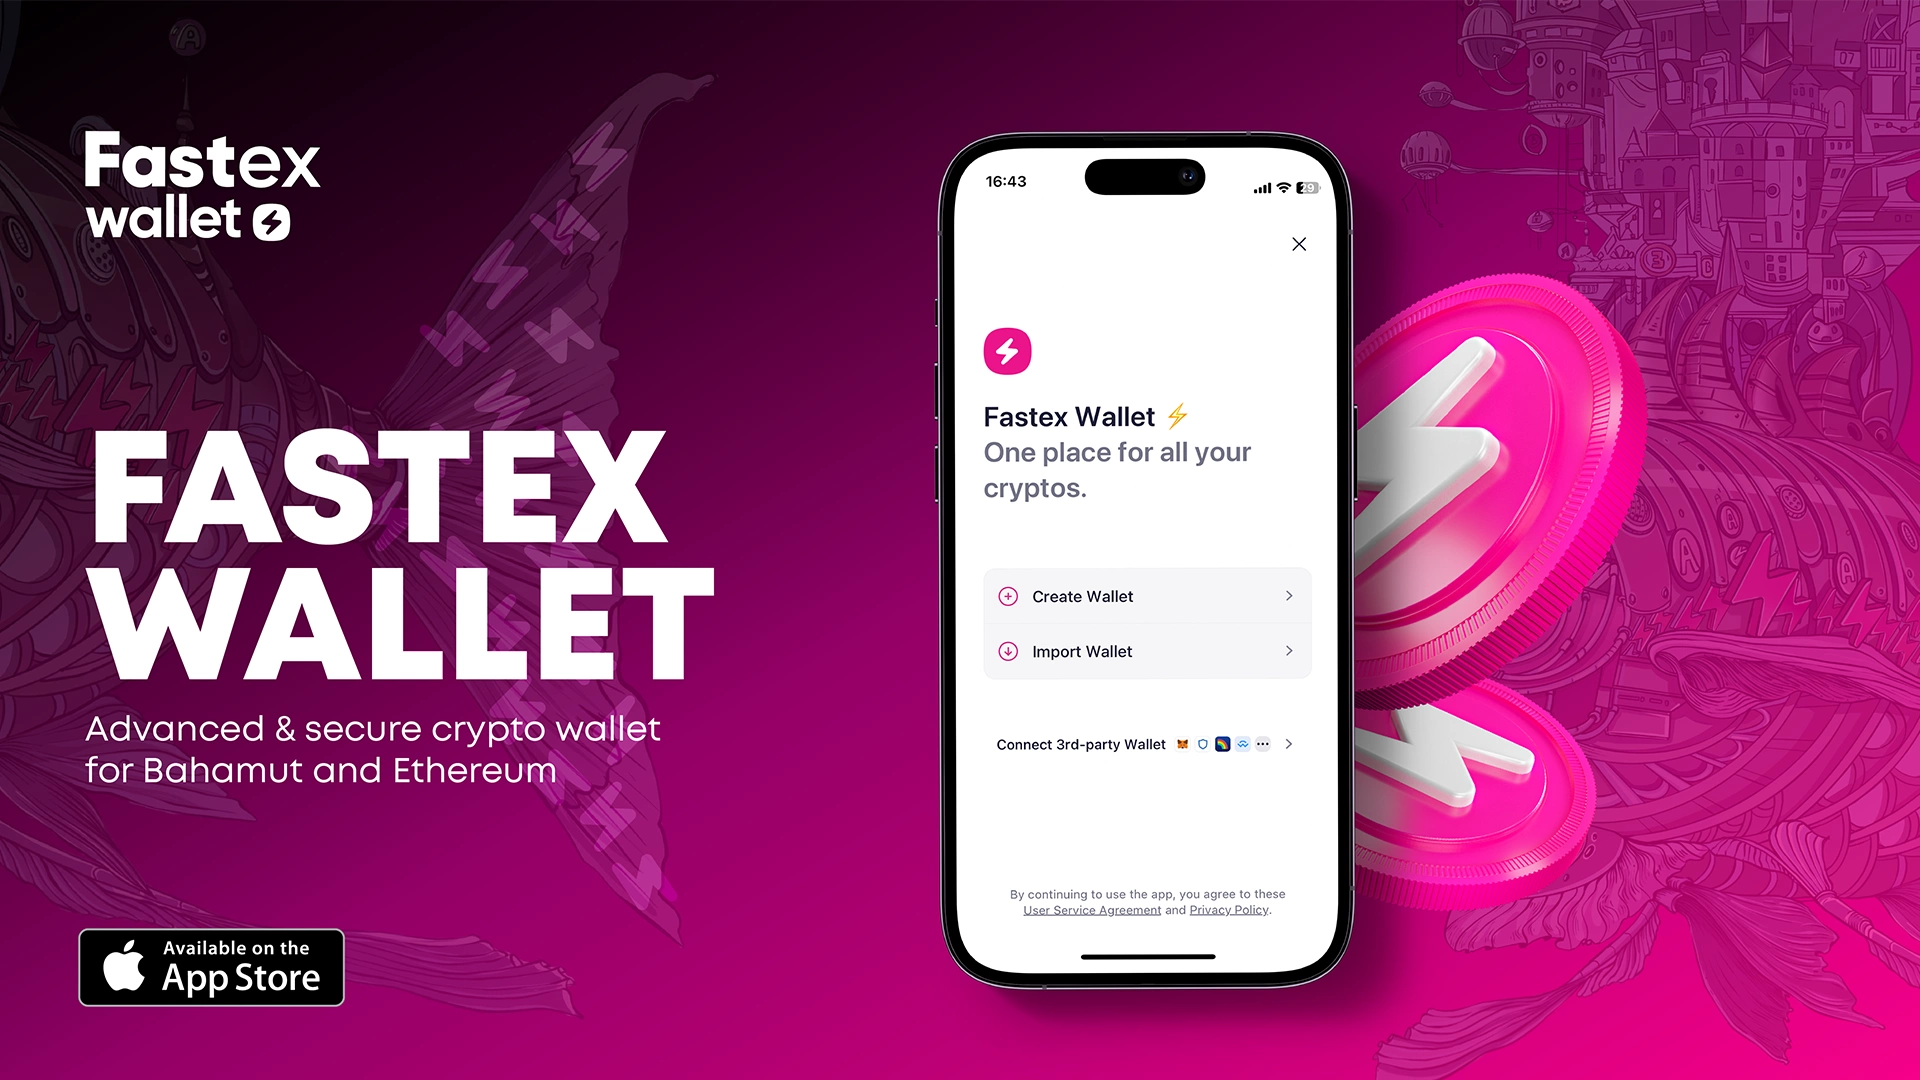 Fastex Billetera se lanza en la App Store